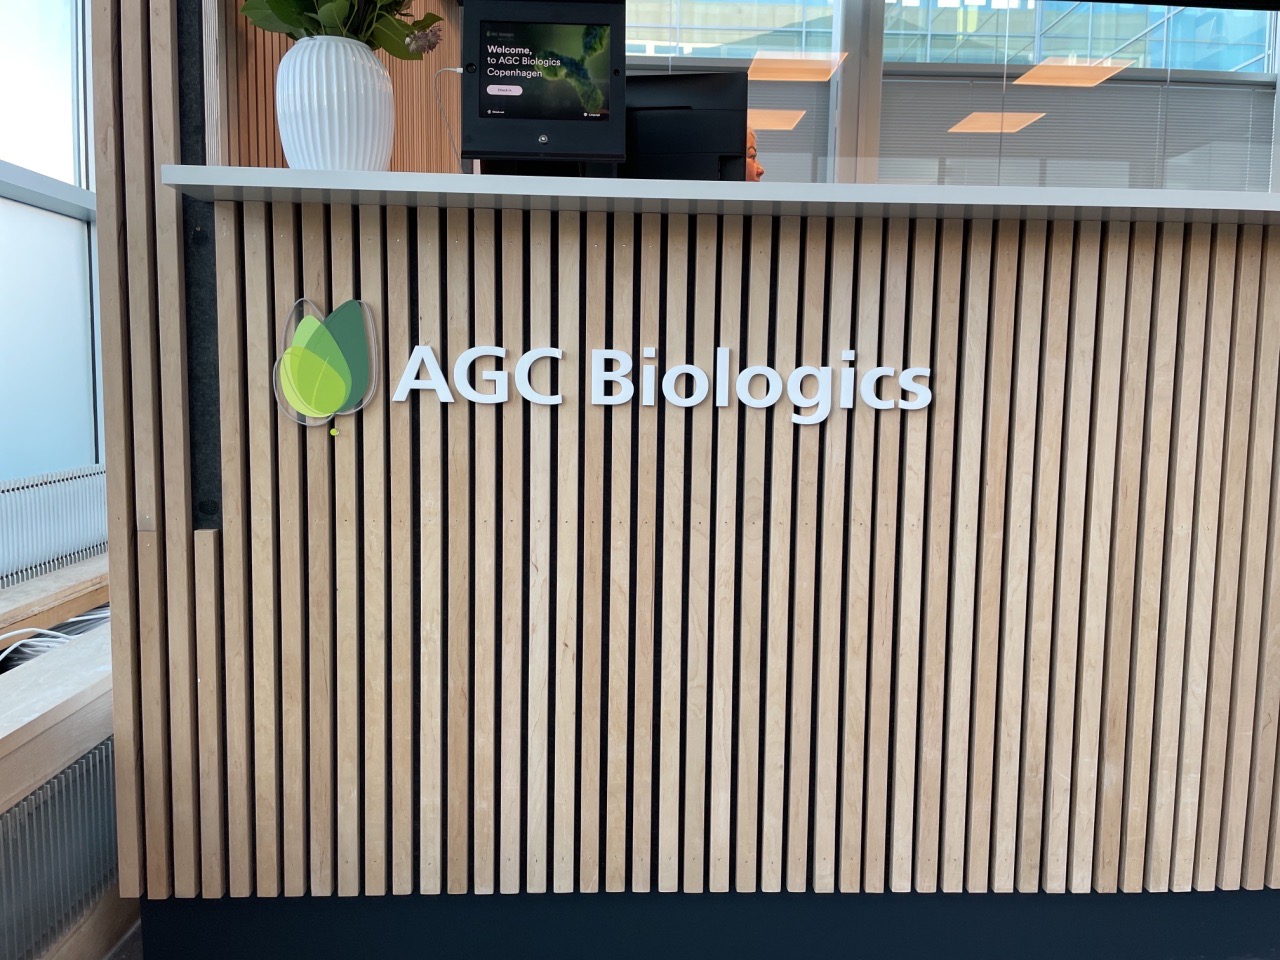 AGC Biologics_2021.11.12 14.01.05.500